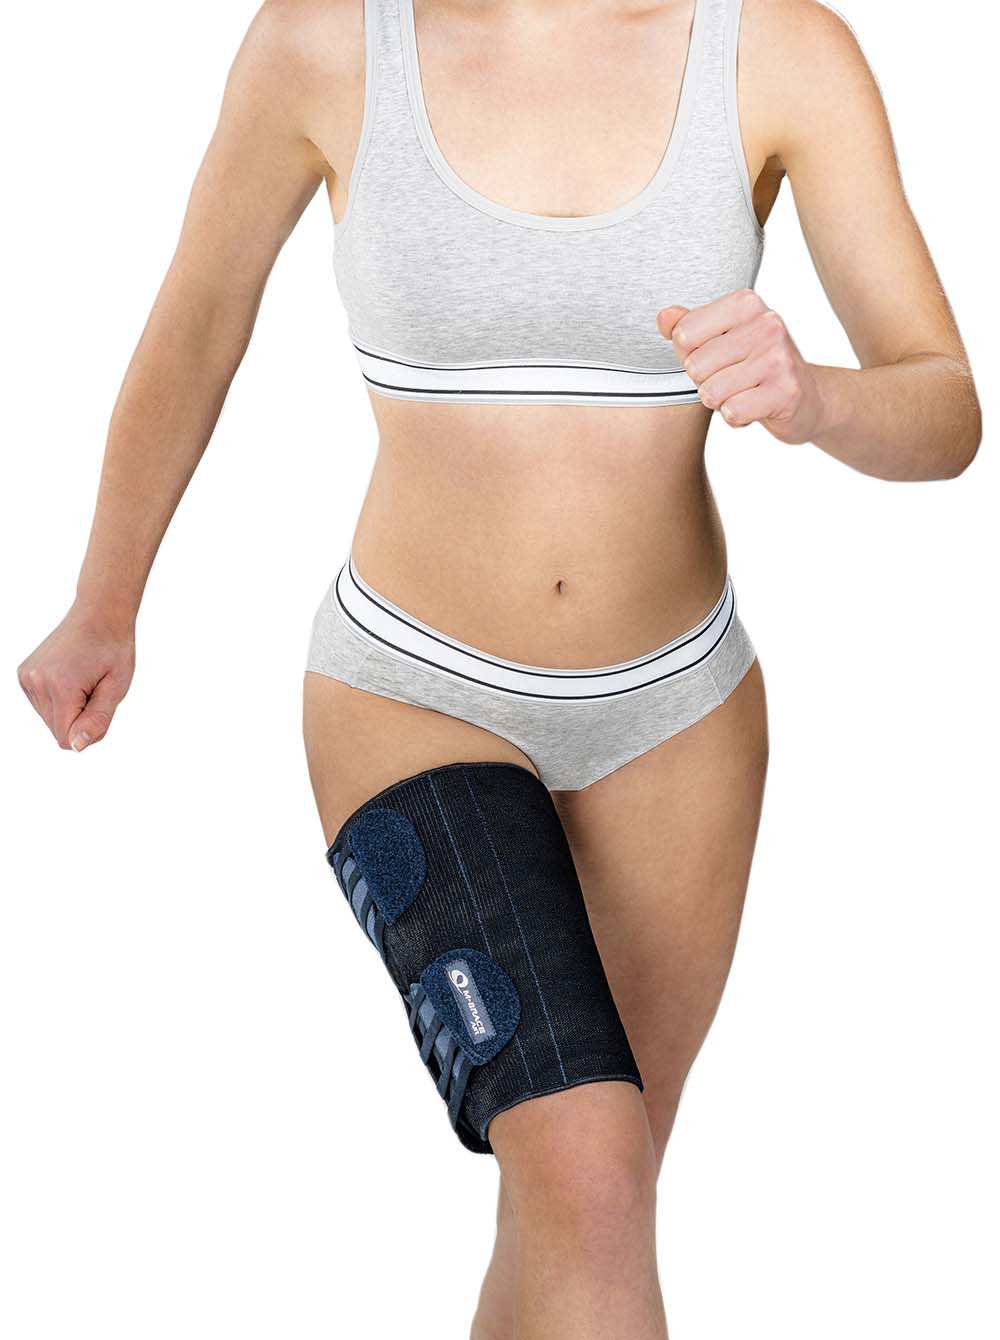 Thigh Support Compression Sleeve Brace Hamstring Wrap Leg Bandage